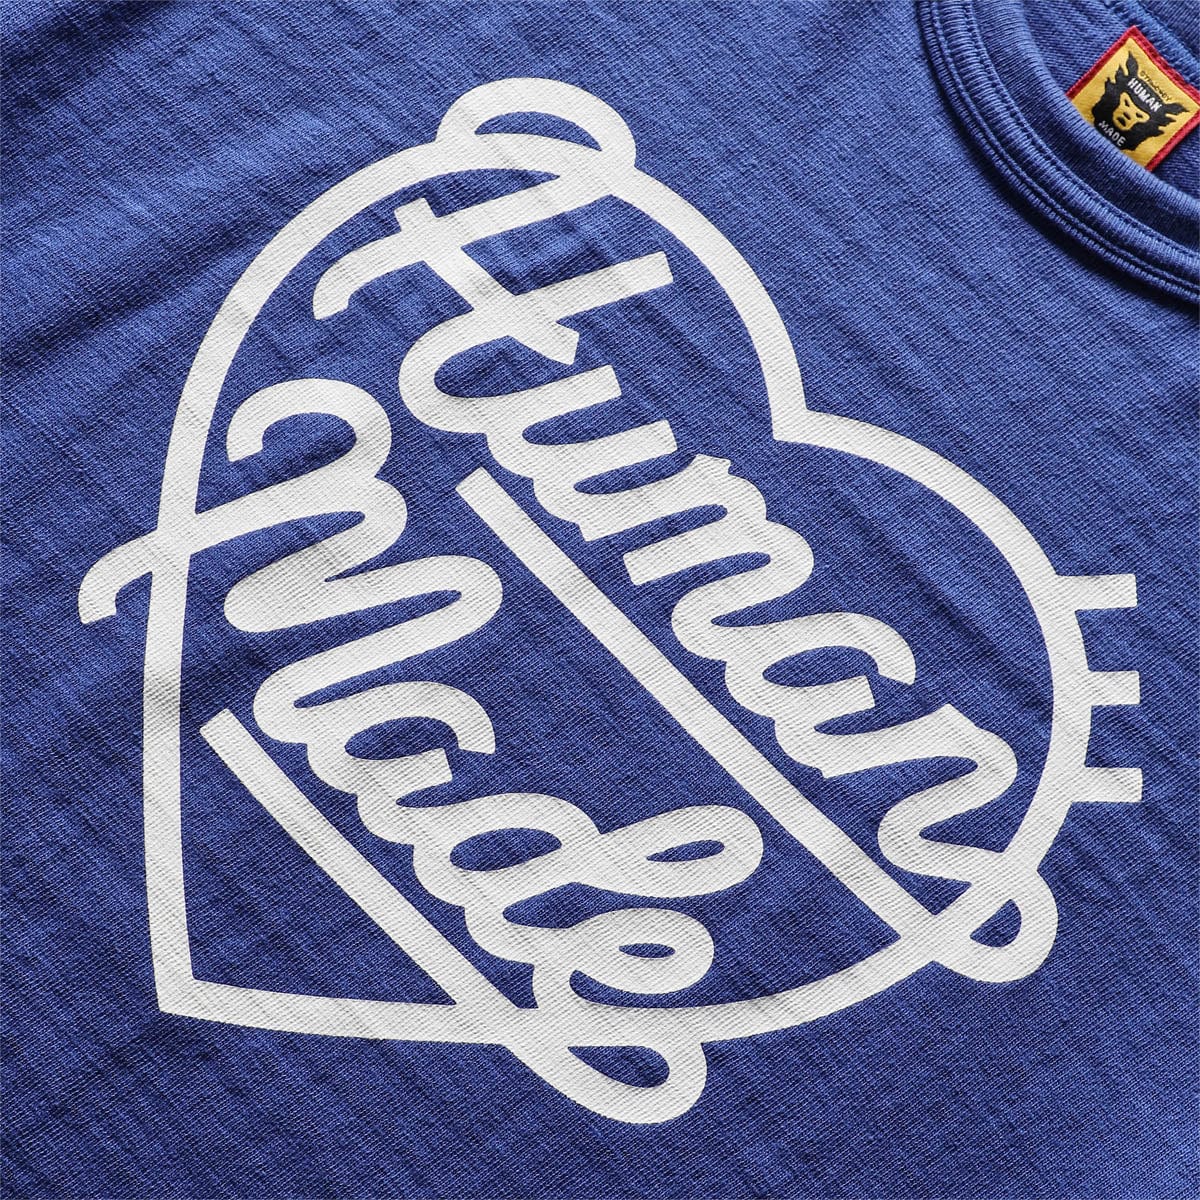 Human Made T-Shirts COLOR T-SHIRT #2